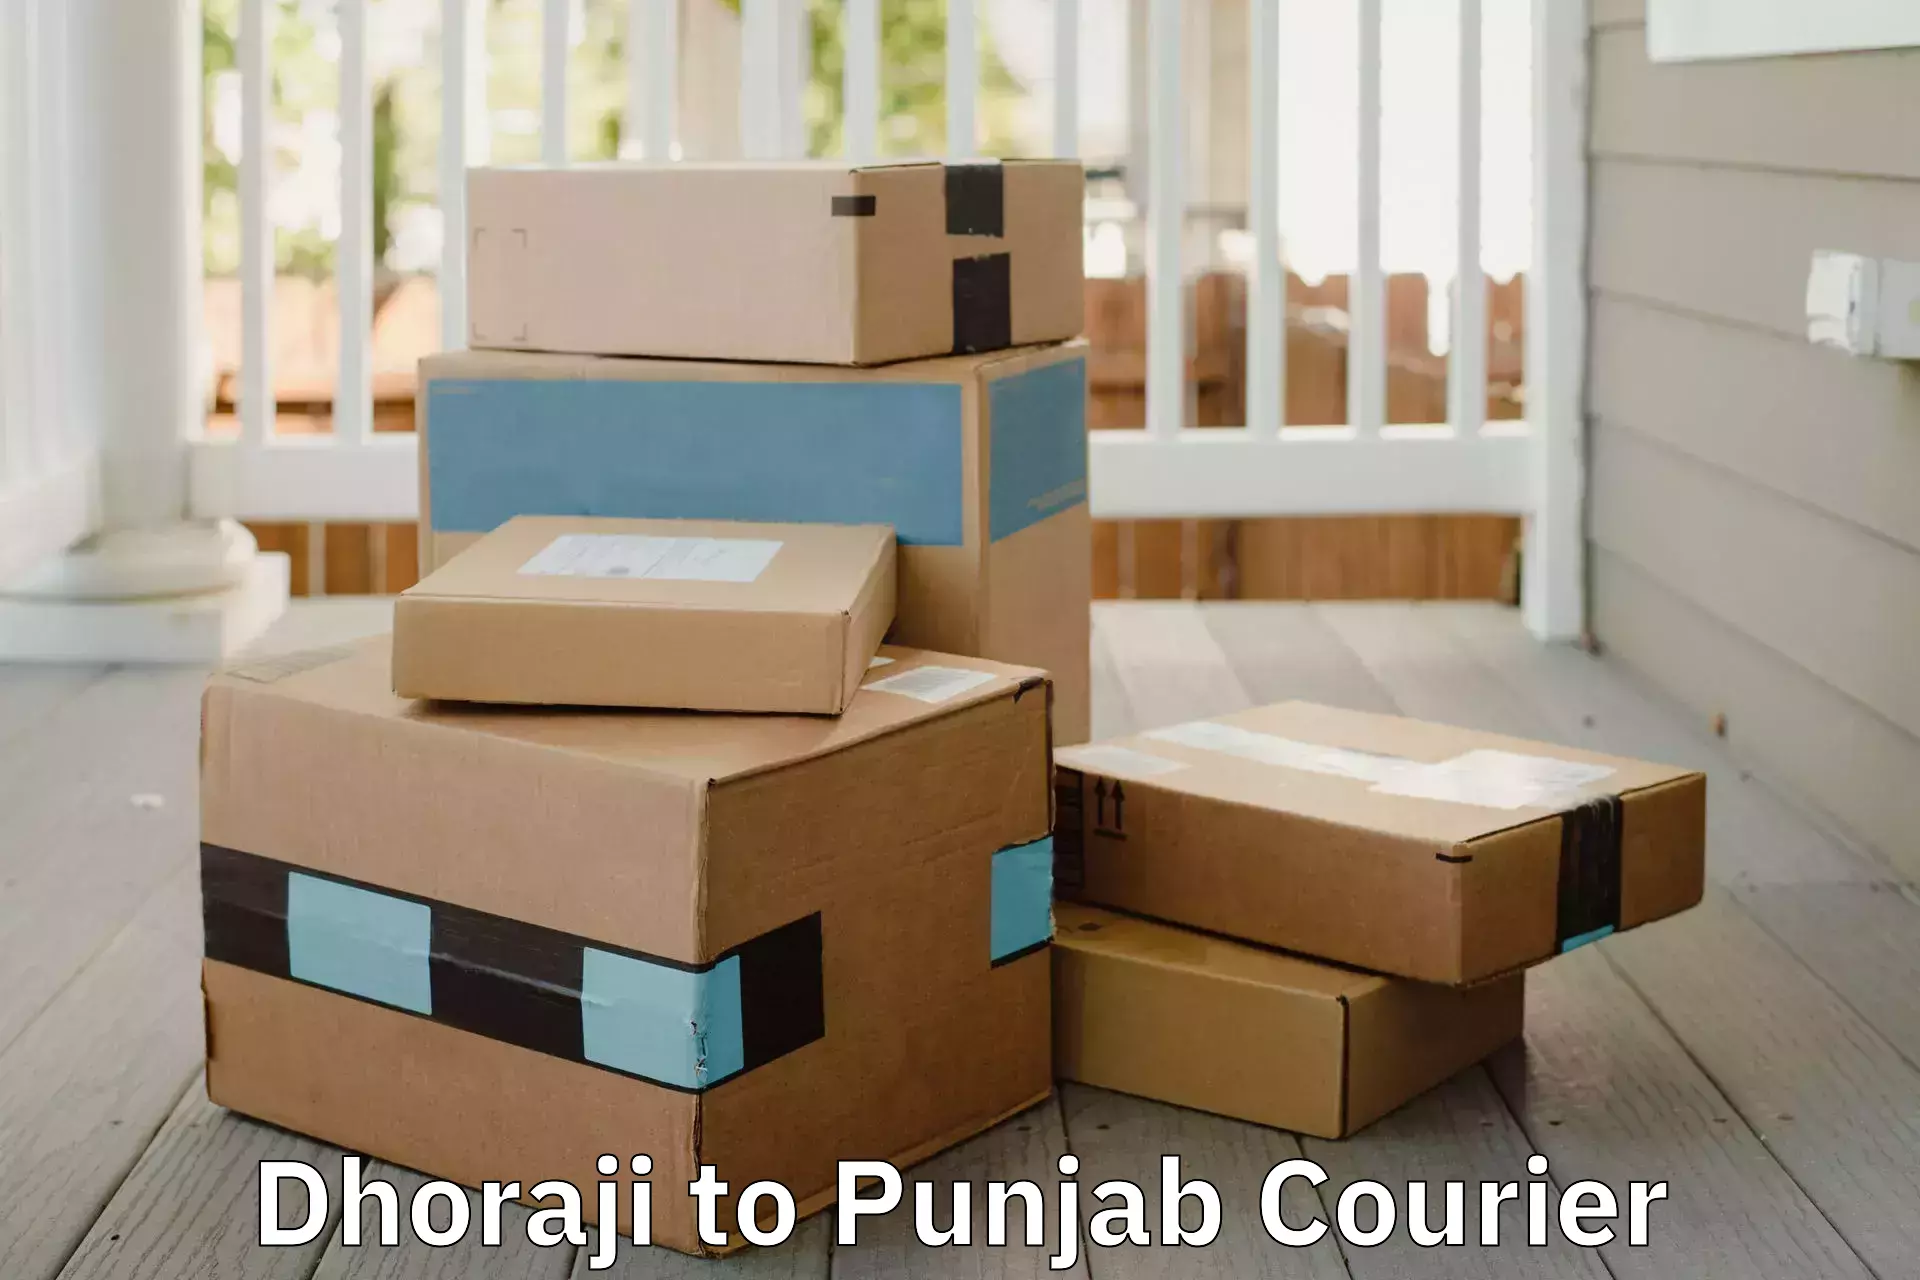 Household goods transport service Dhoraji to Punjab